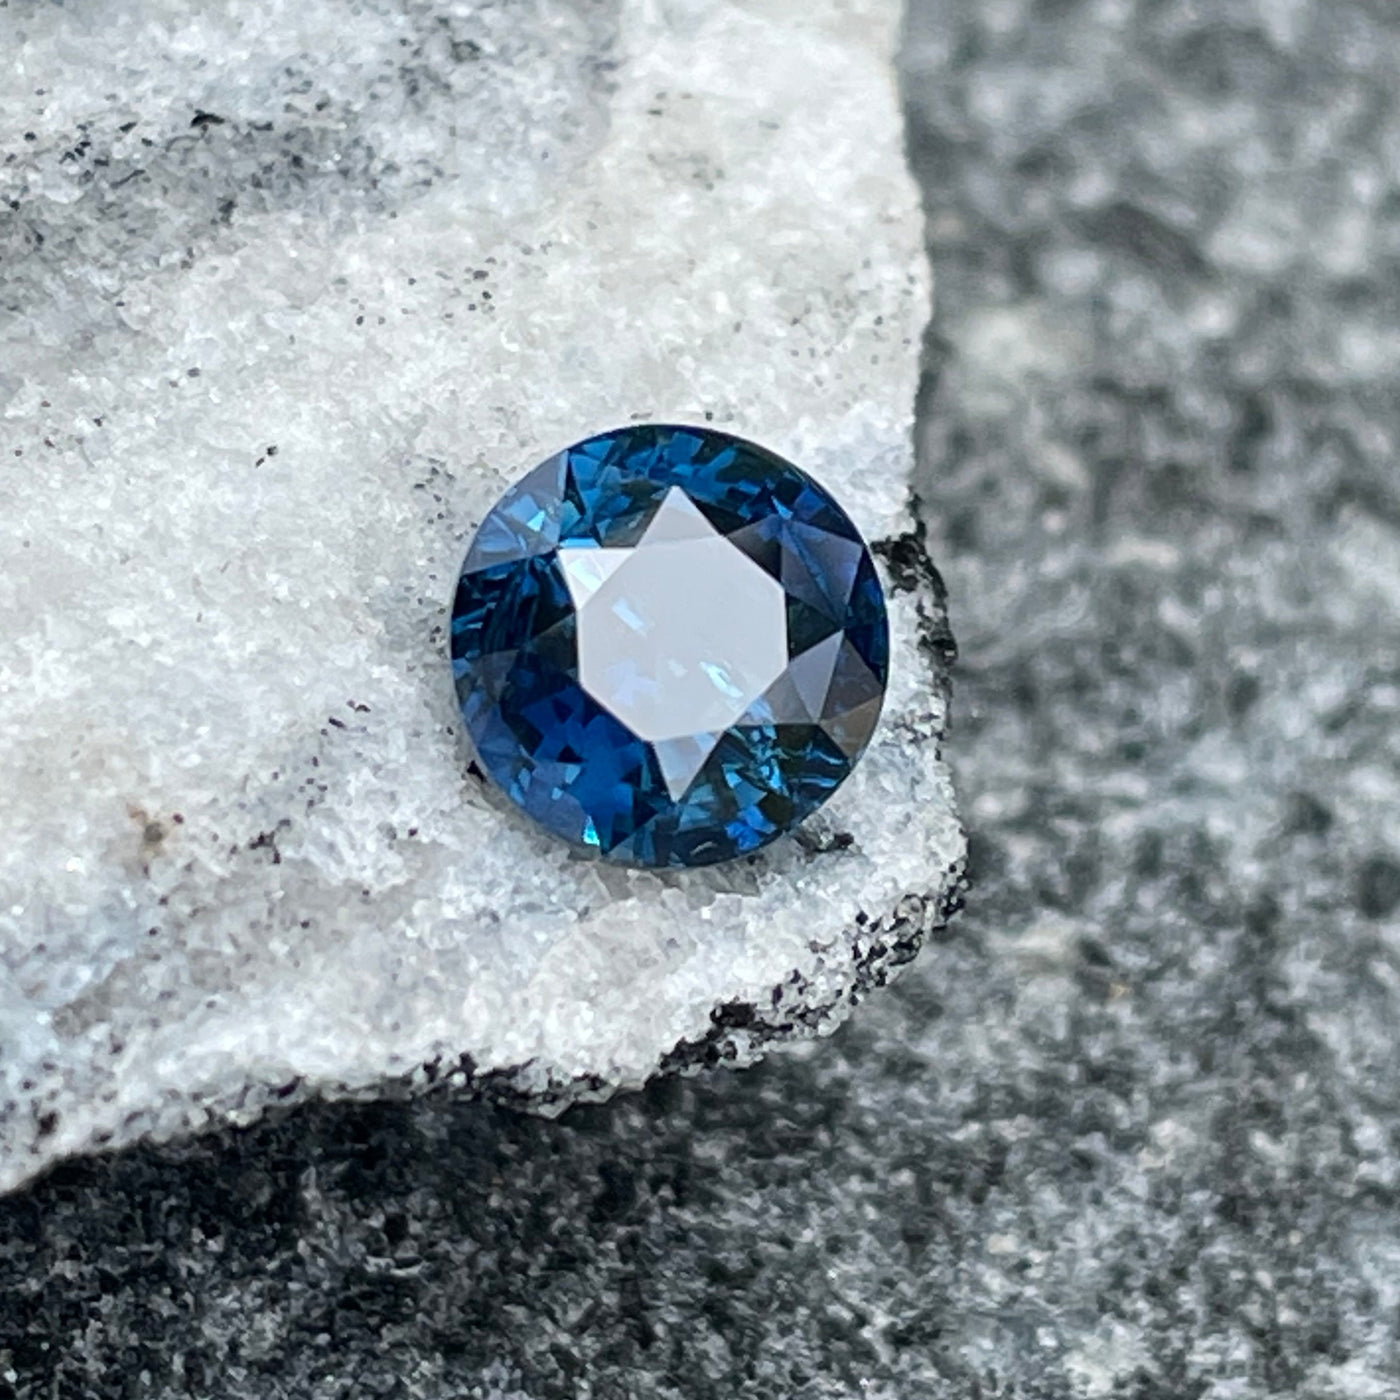 Blue Sapphire 